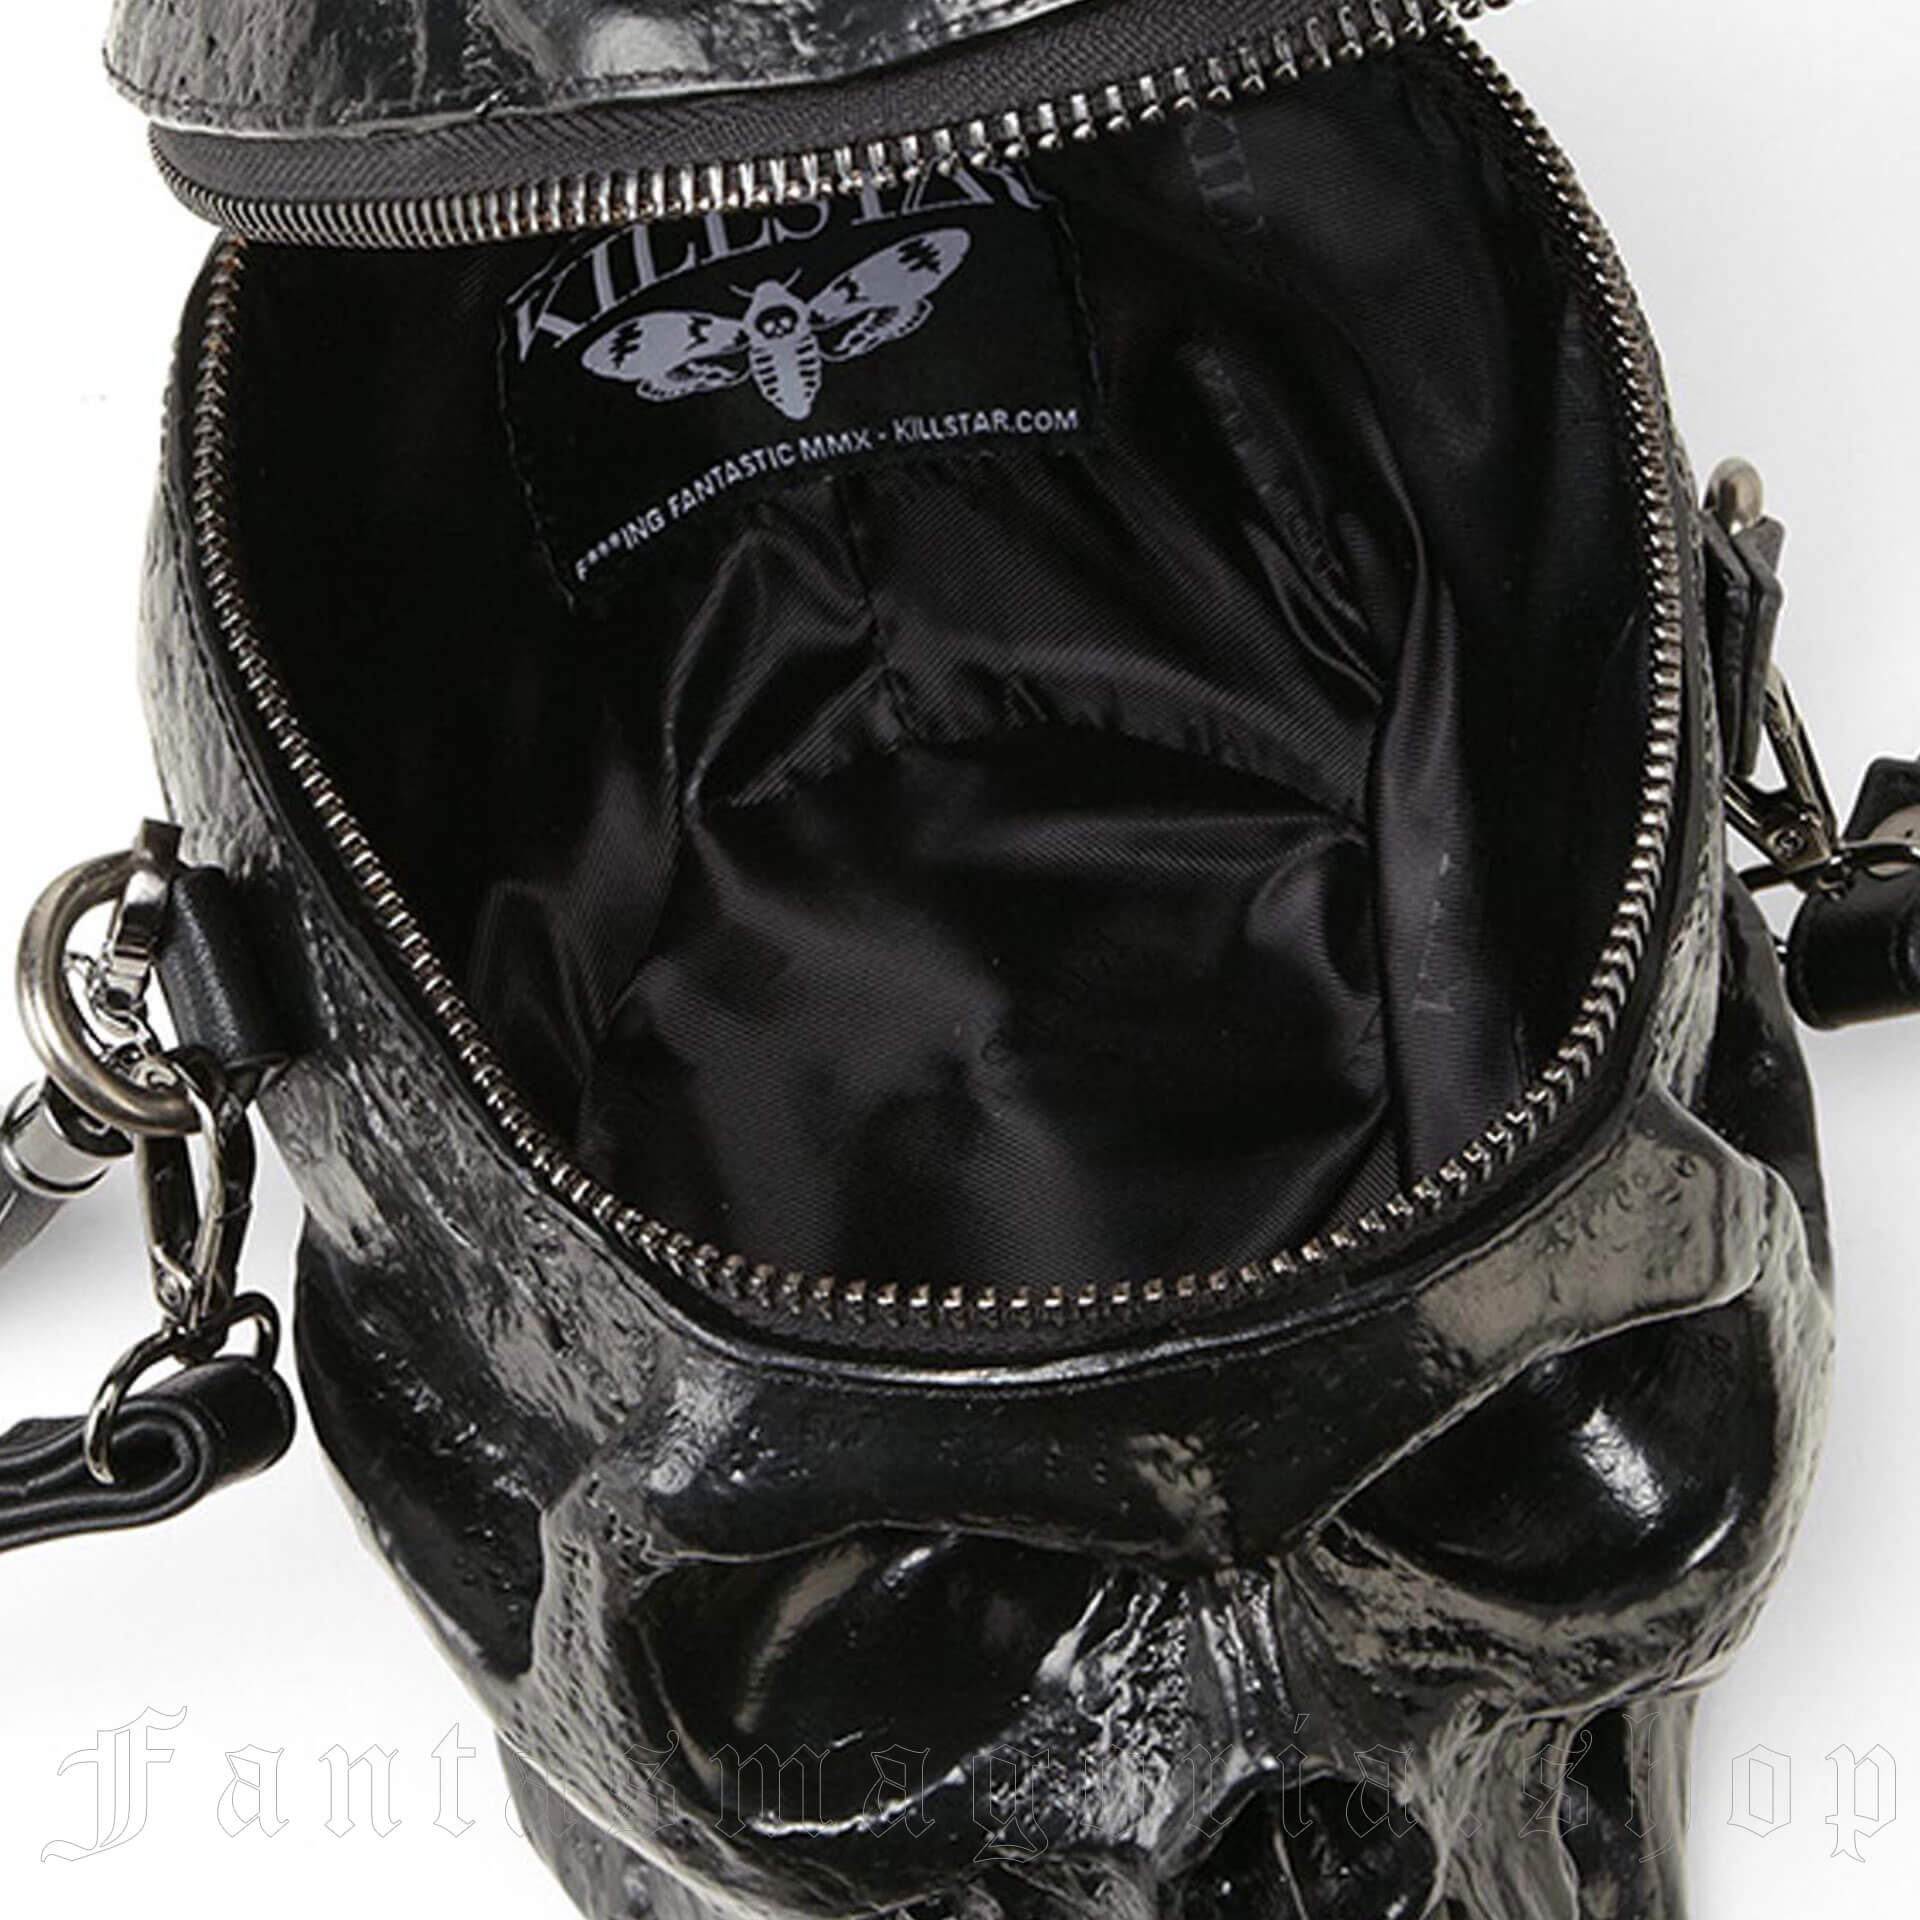 Alexander McQueen Skull Padlock Tote Bag Review - YouTube